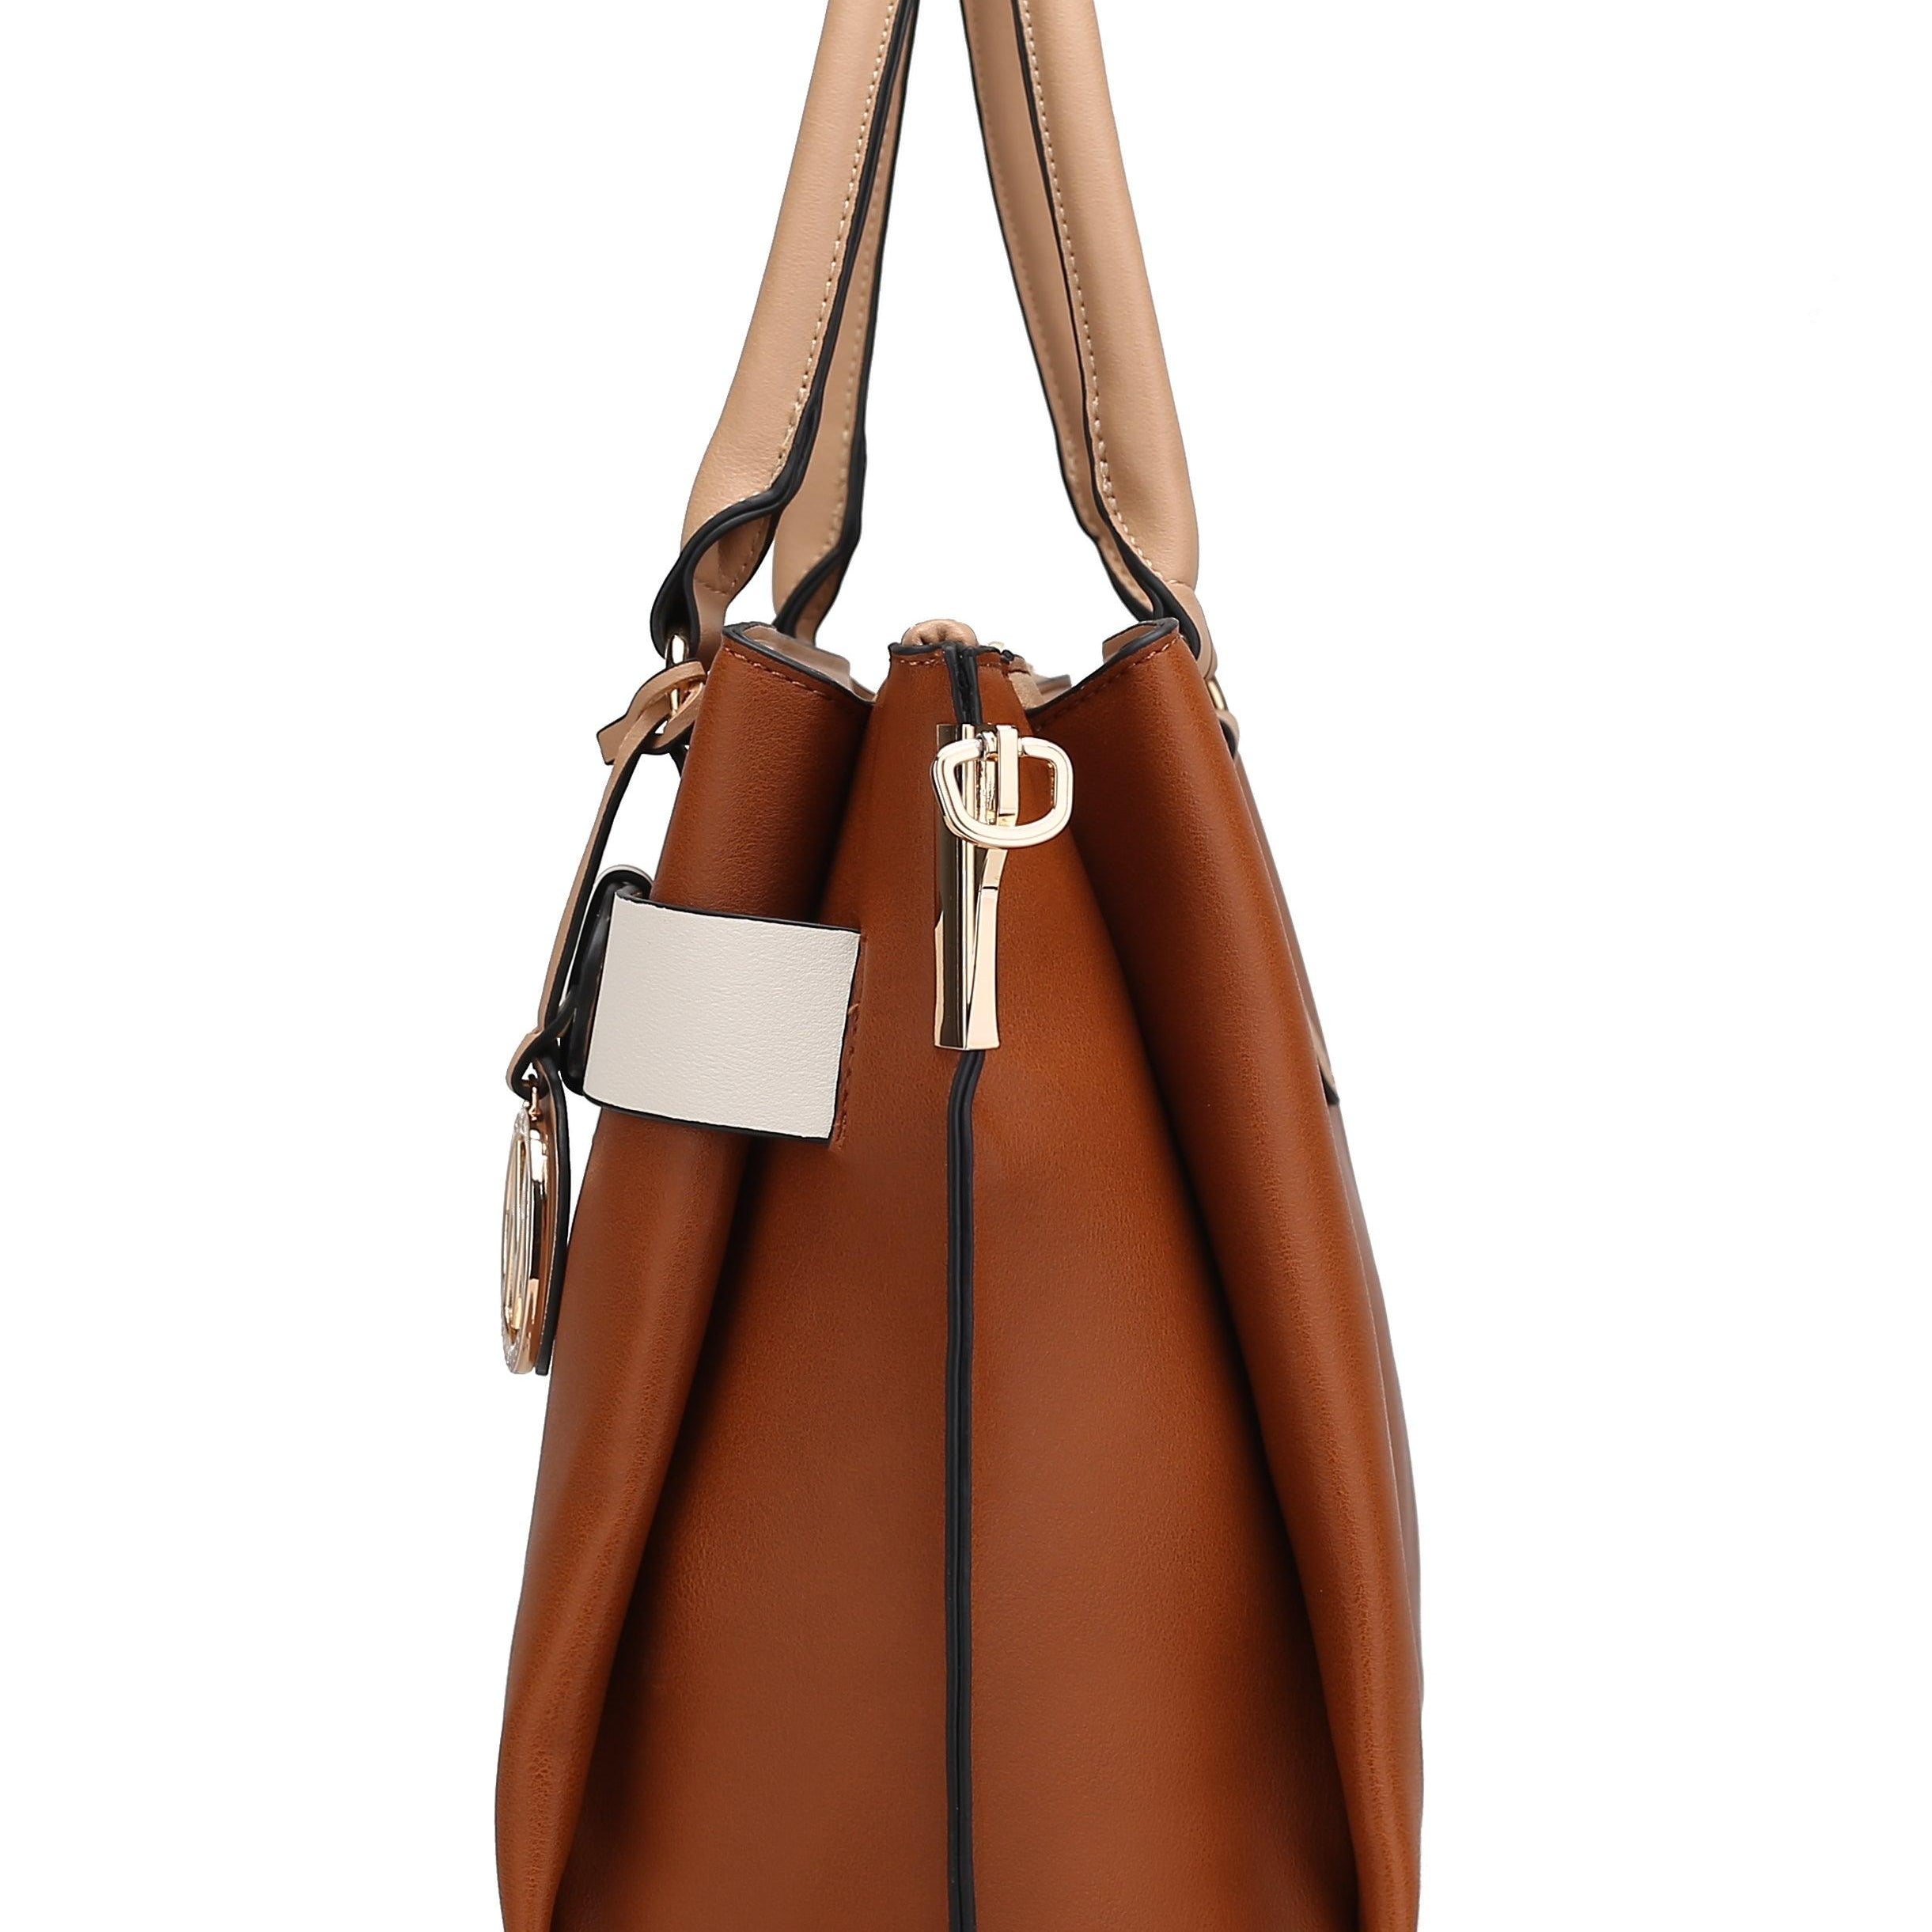 Wallets, Handbags & Accessories Jamie Satchel Handbag